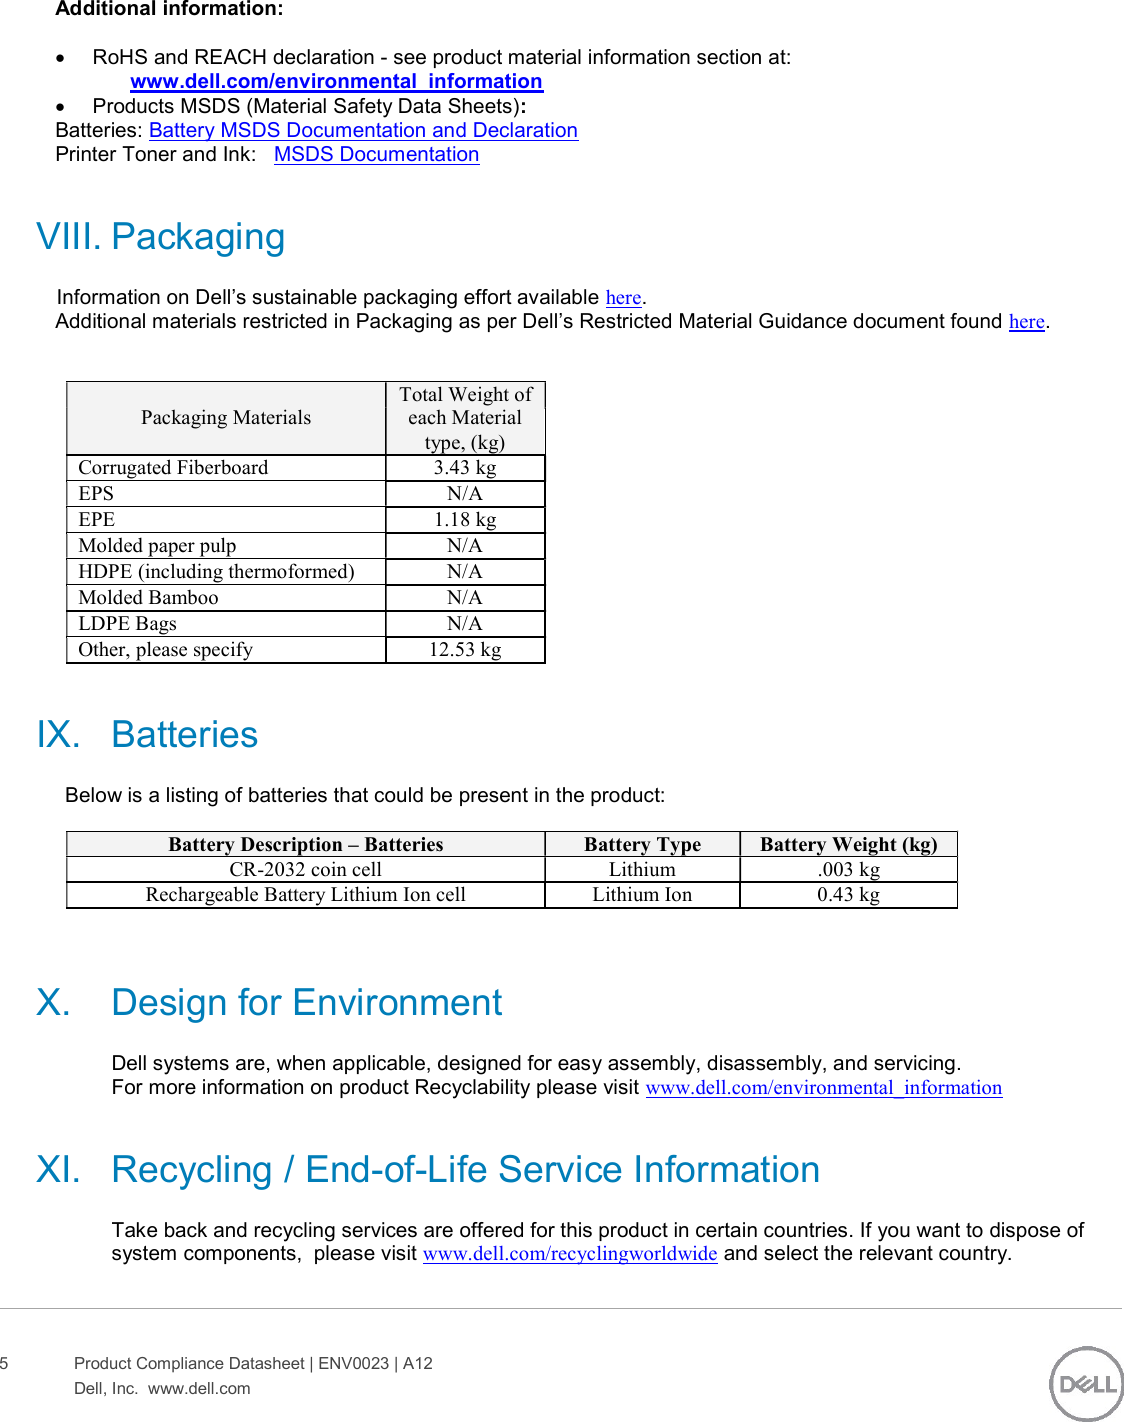 Page 5 of 6 - Dell Storage-sc420f - Datasheet EMC Storage SC7020F, SC5020F And SC420F Harpoon Update Format Dec 2017 User Manual  Regulatory Environmental Sc420f,e03t,e03t001,dell